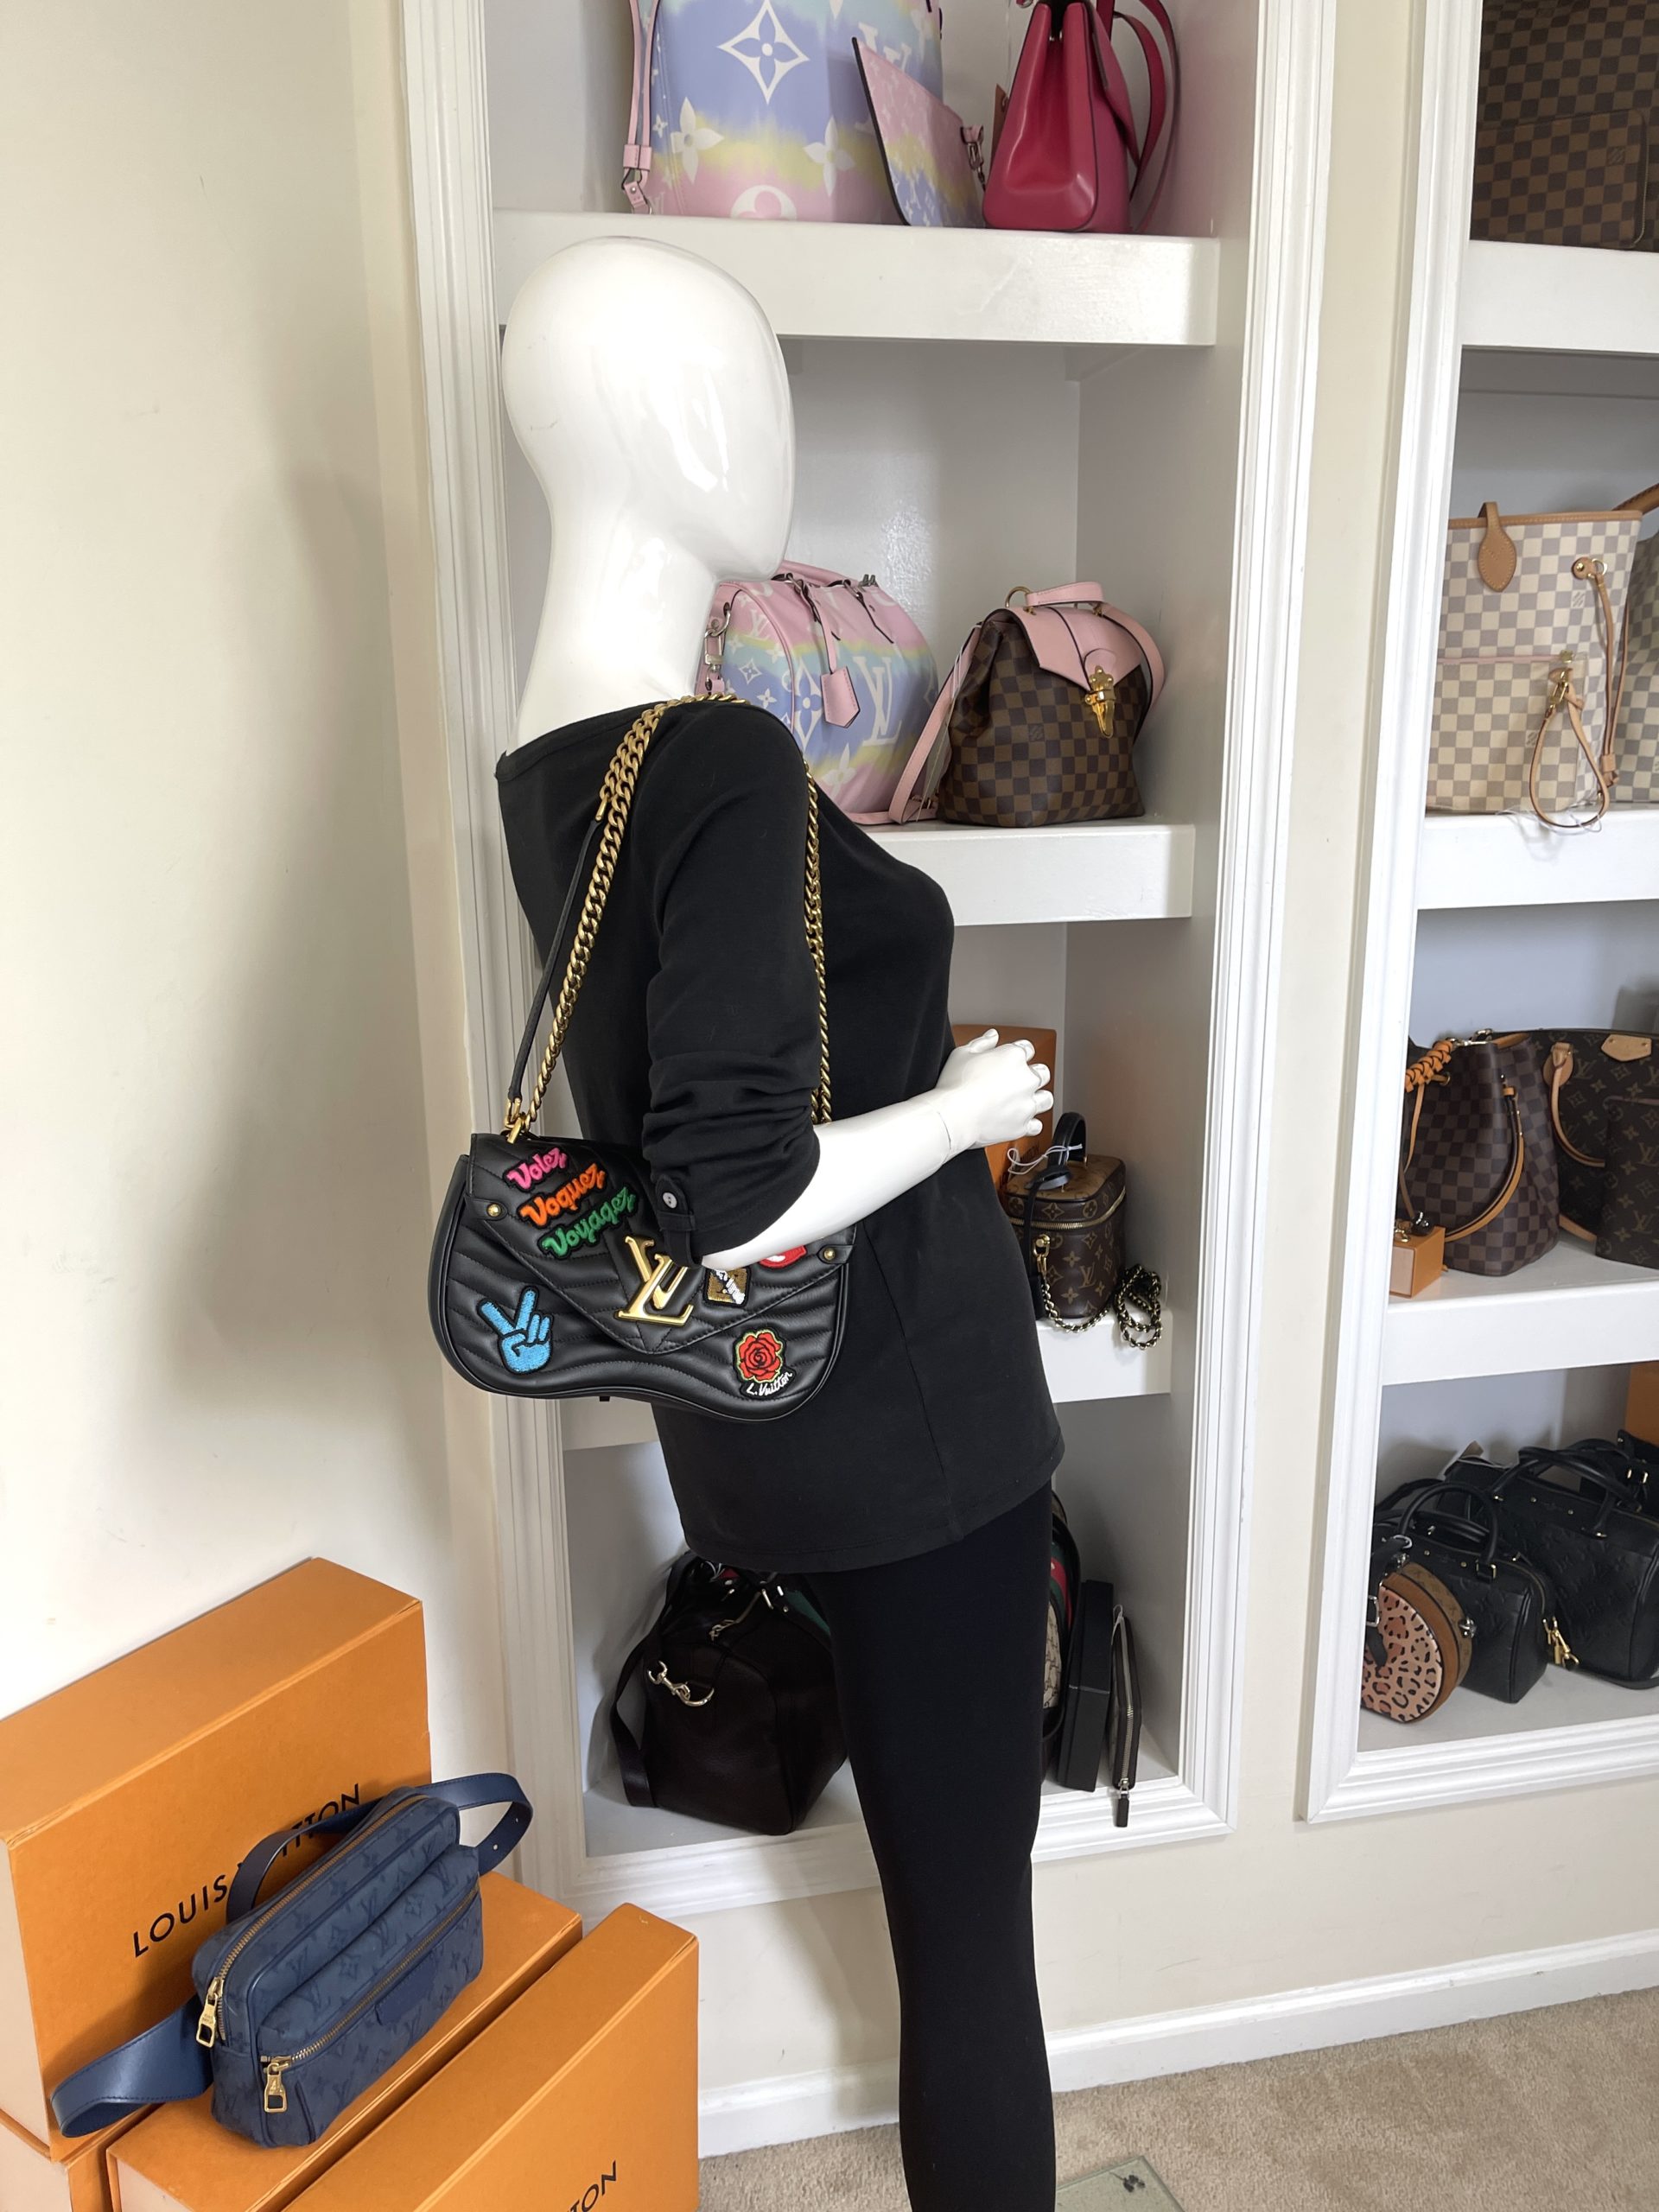 Louis Vuitton Handbag, The New Wave Chain Bag Review